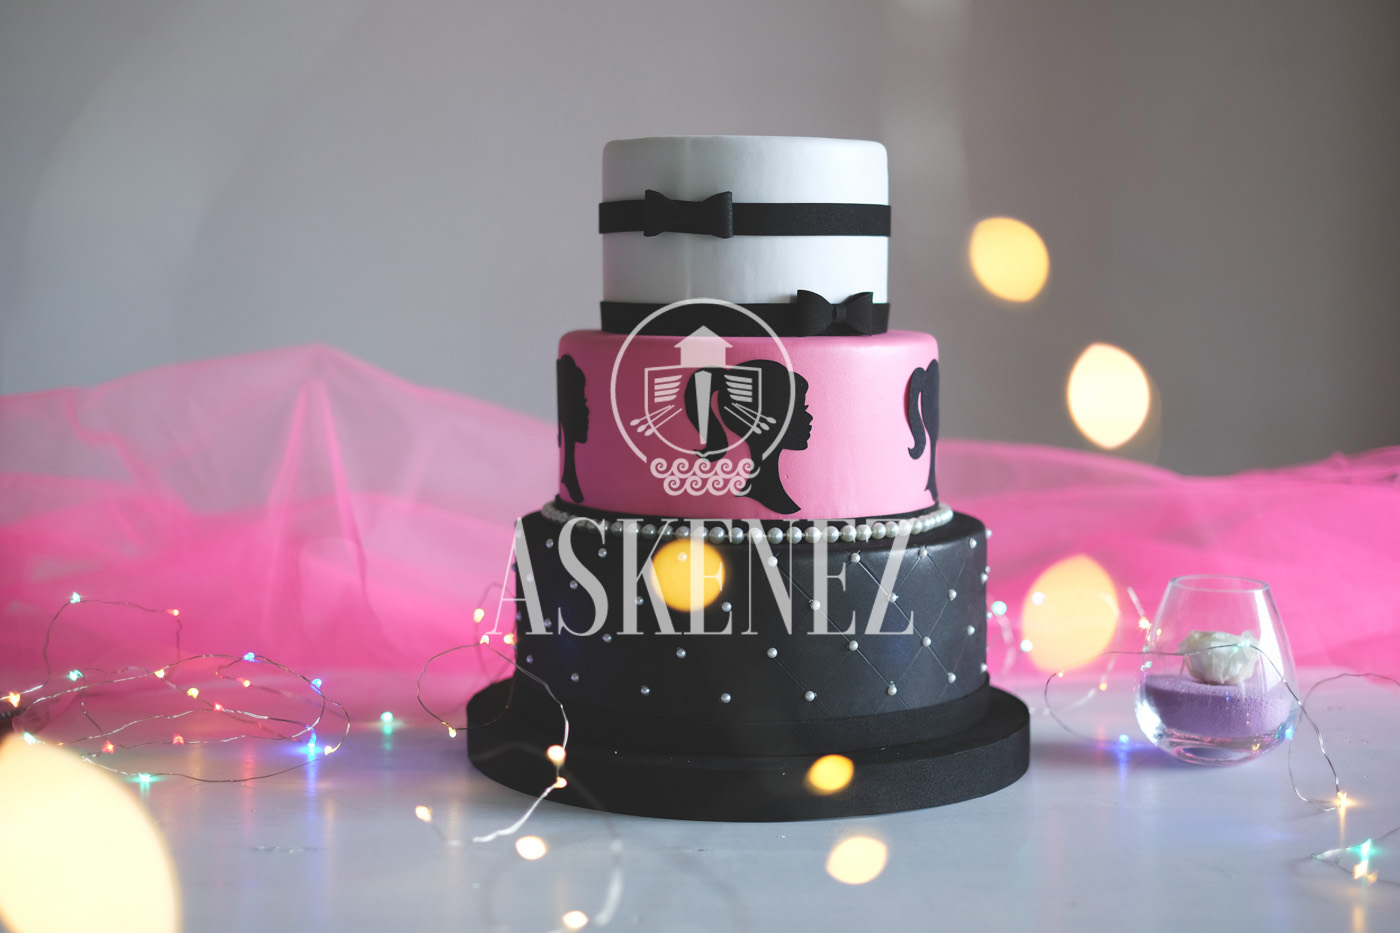 Askenez - ASKENEZ, torte scenografiche, torte finte, cake fake in gomma  crepla